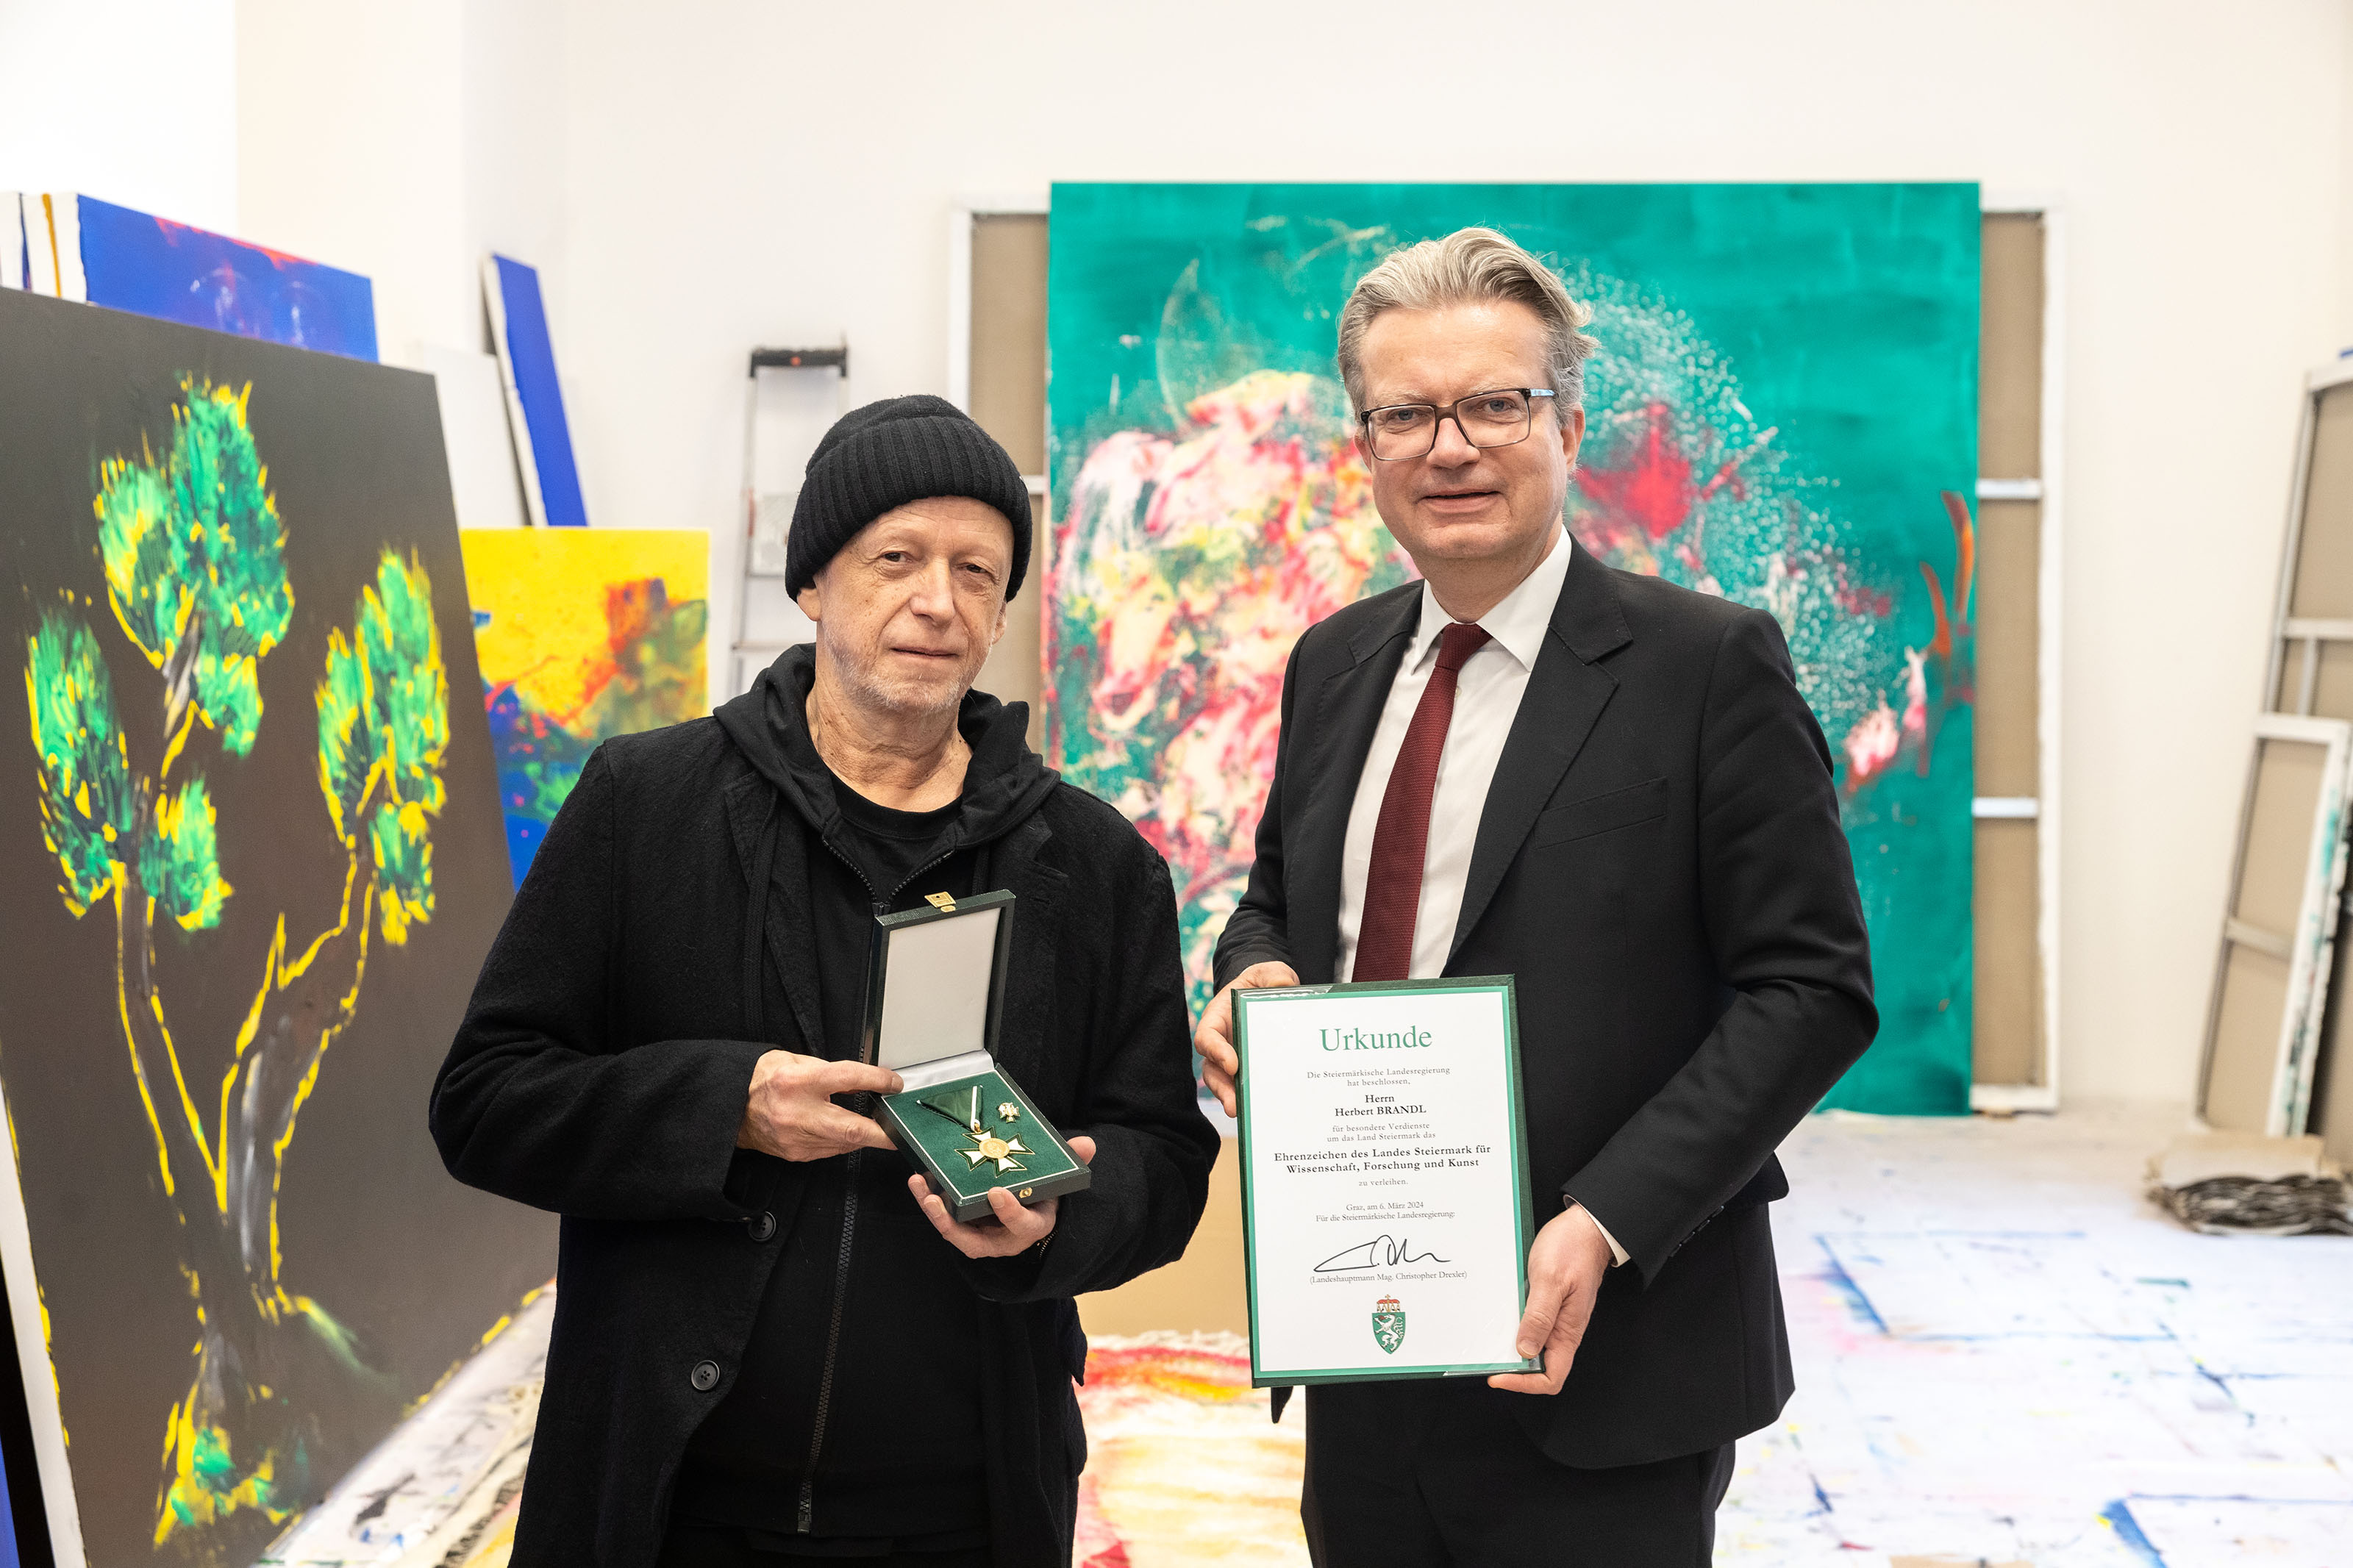 High Prize for the Artist Herbert Brandel – State of Styria